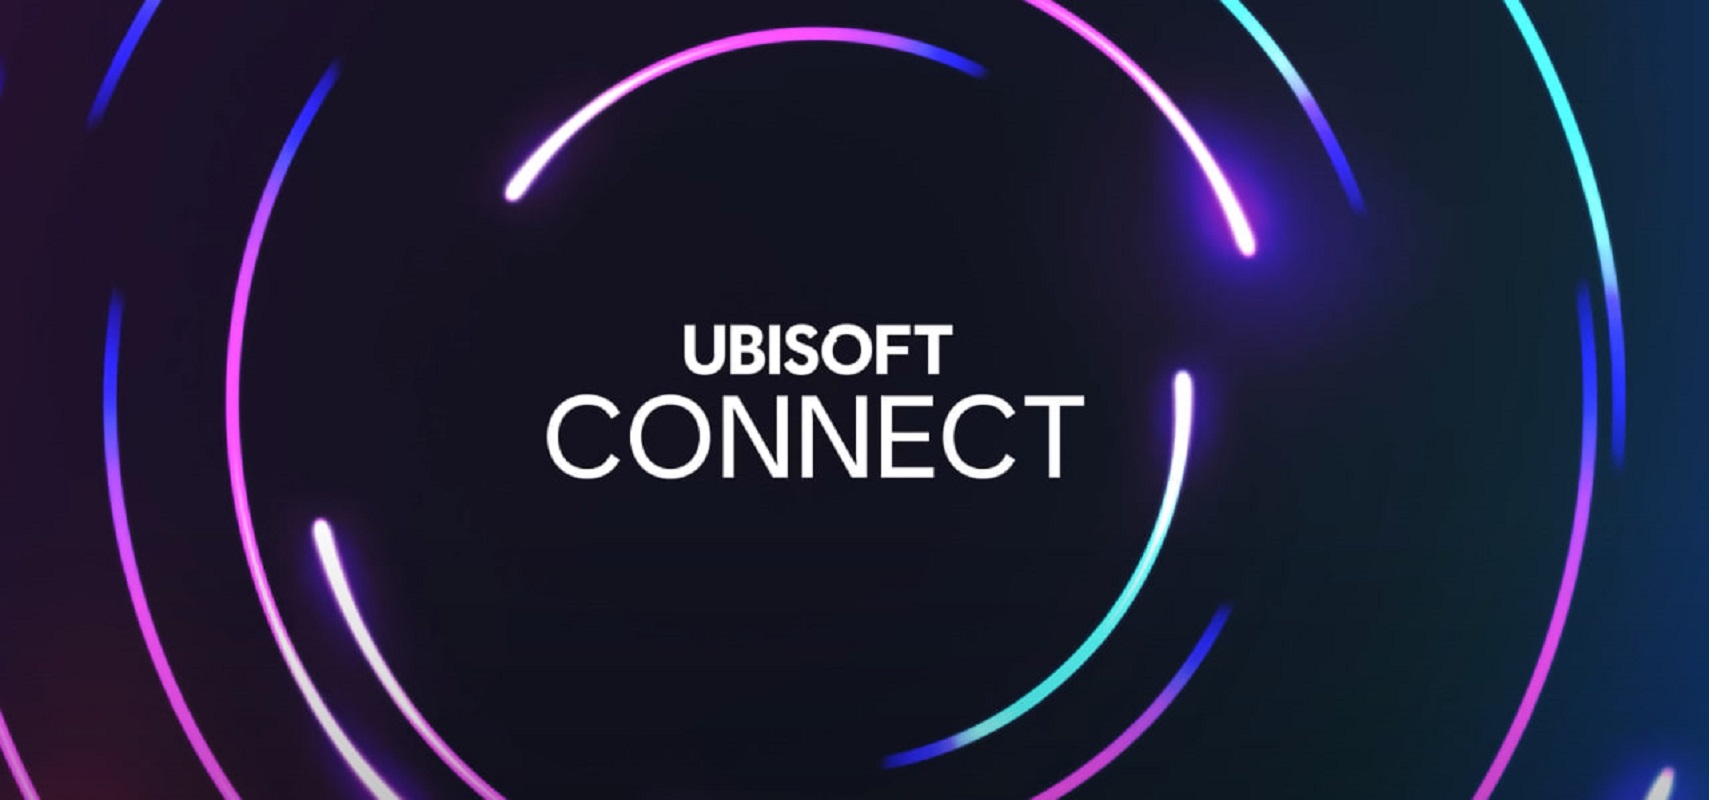 K connect. Юбисофт Коннект. Логотип Ubisoft. Ubisoft connect.